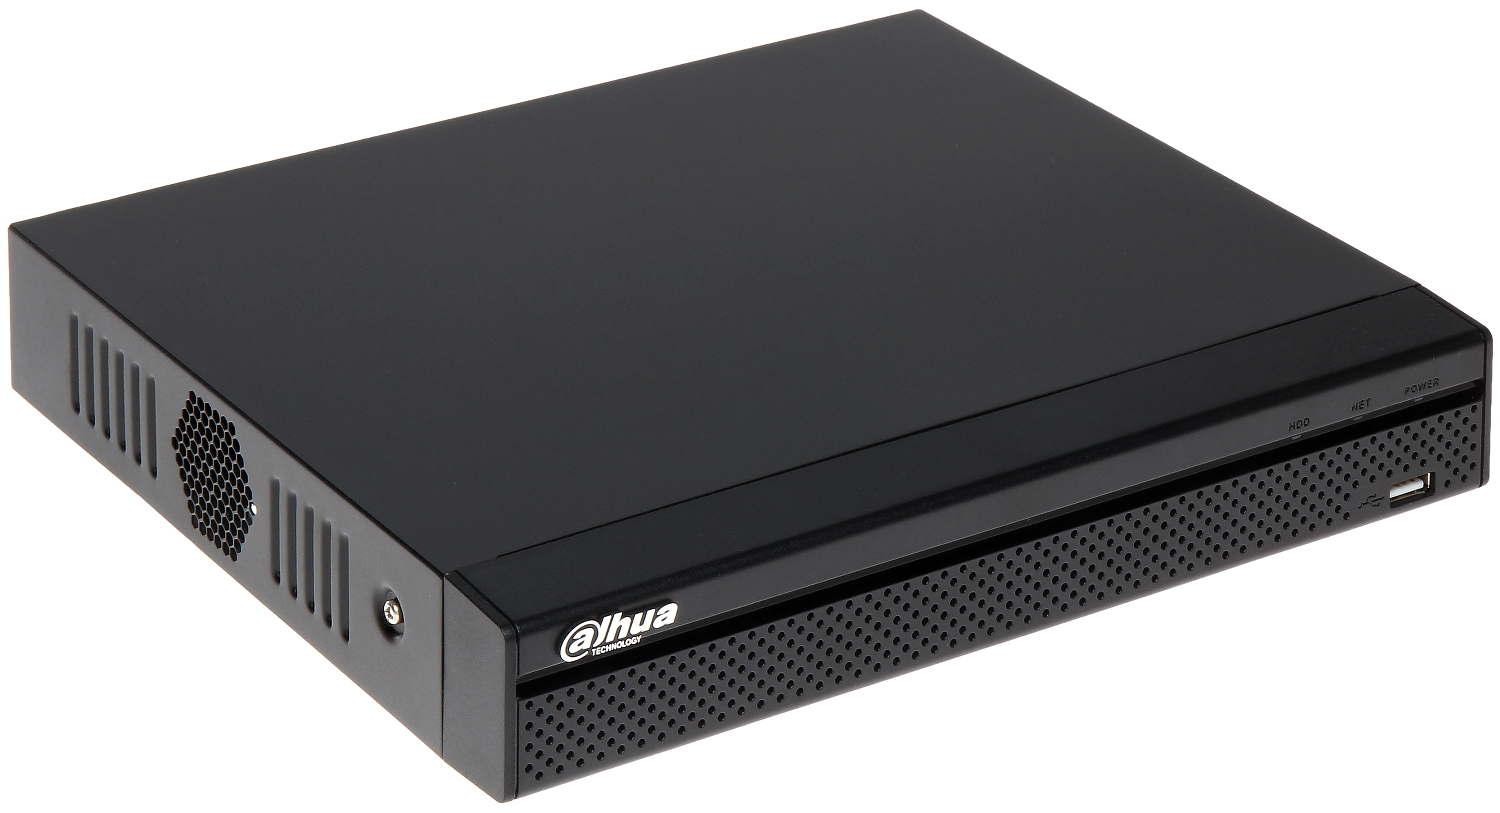 NVR LITE Dahua NVR 4108HS -8P-4KS2 80Mbps, Max 4K, 8chan., 1080p, 1 VGA/1 HDMI, 8x PoE, 1 RJ45(100M), 2 USB2.0